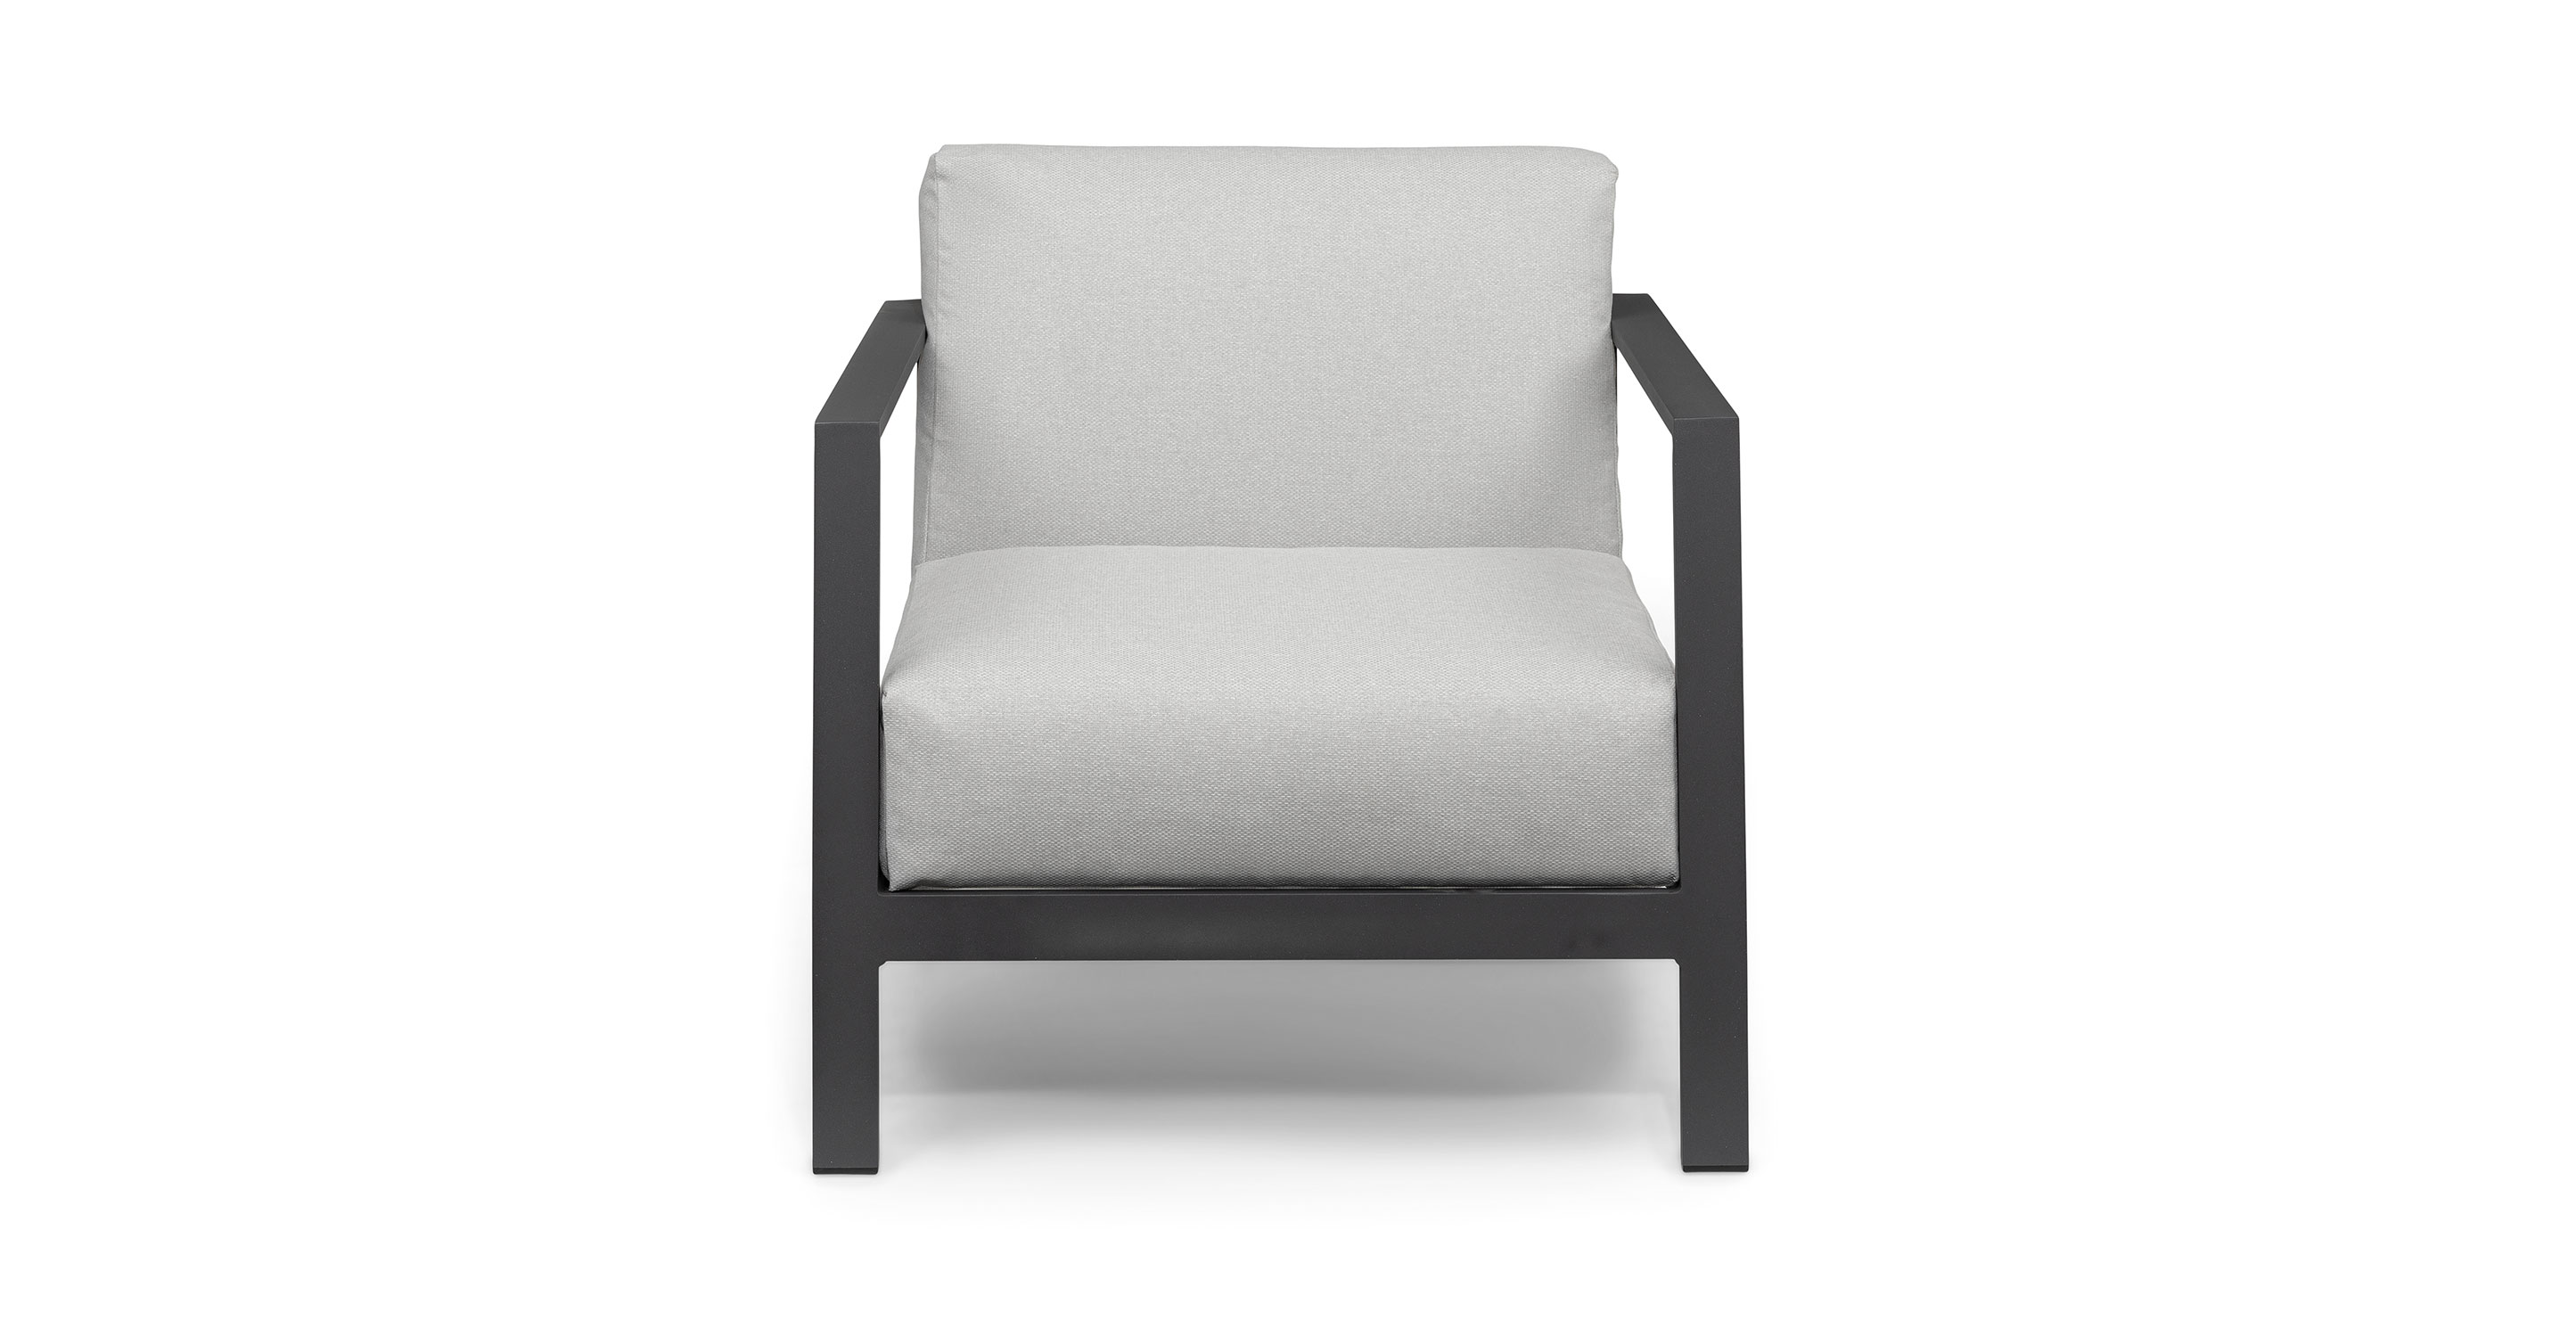 Grand Geniet vertraging Burkel Cloudy Gray Fabric Outdoor Lounge Chair | Article